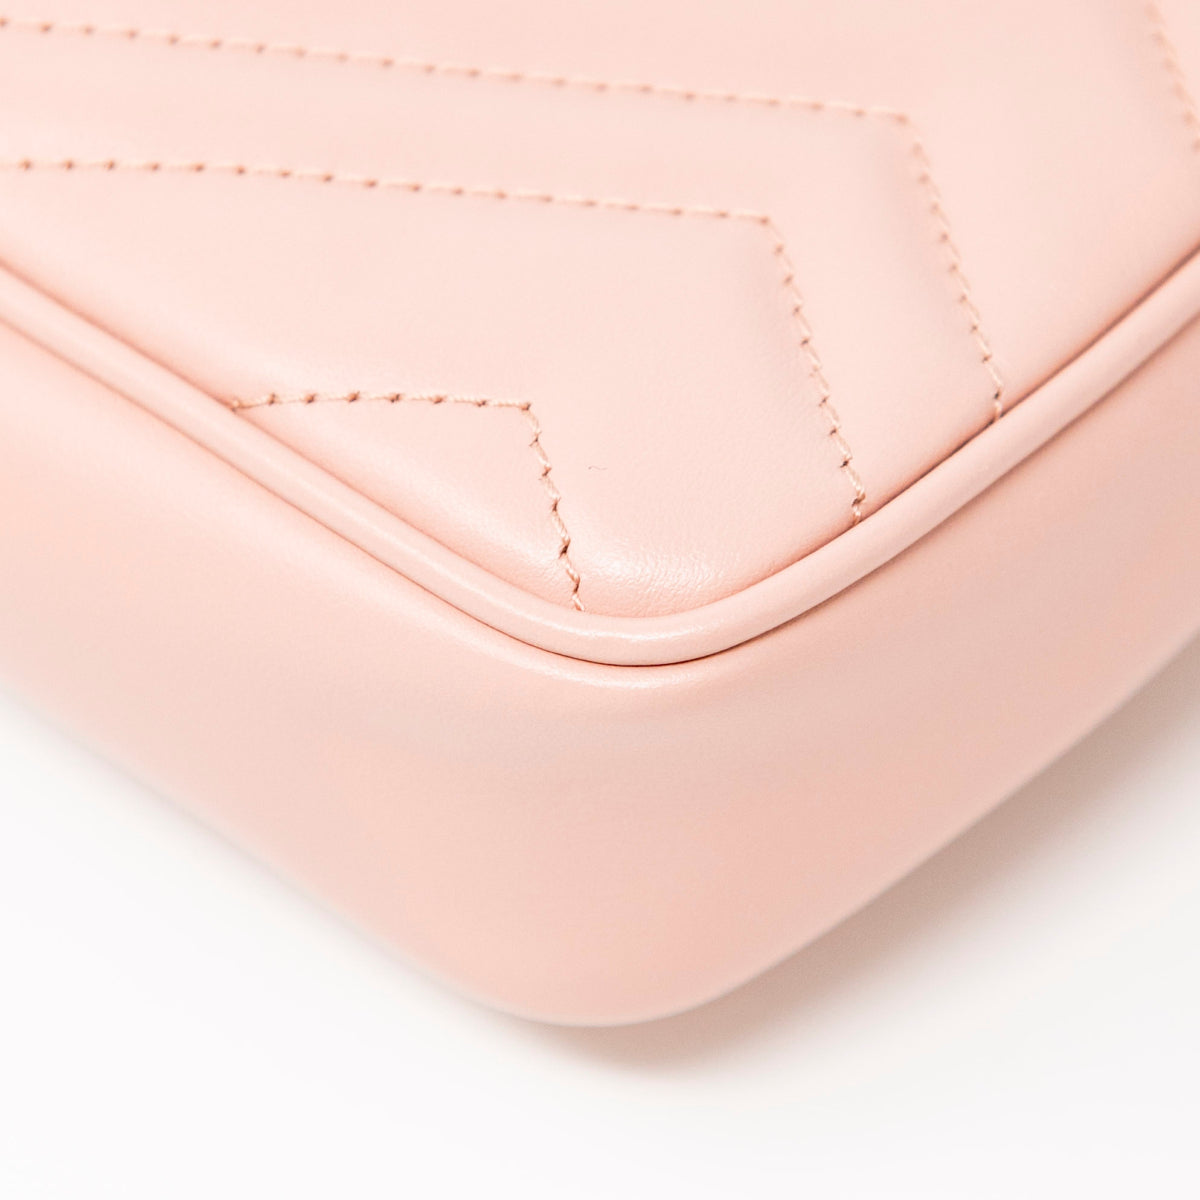 Gucci Pink GG Marmont Belt Bag 80